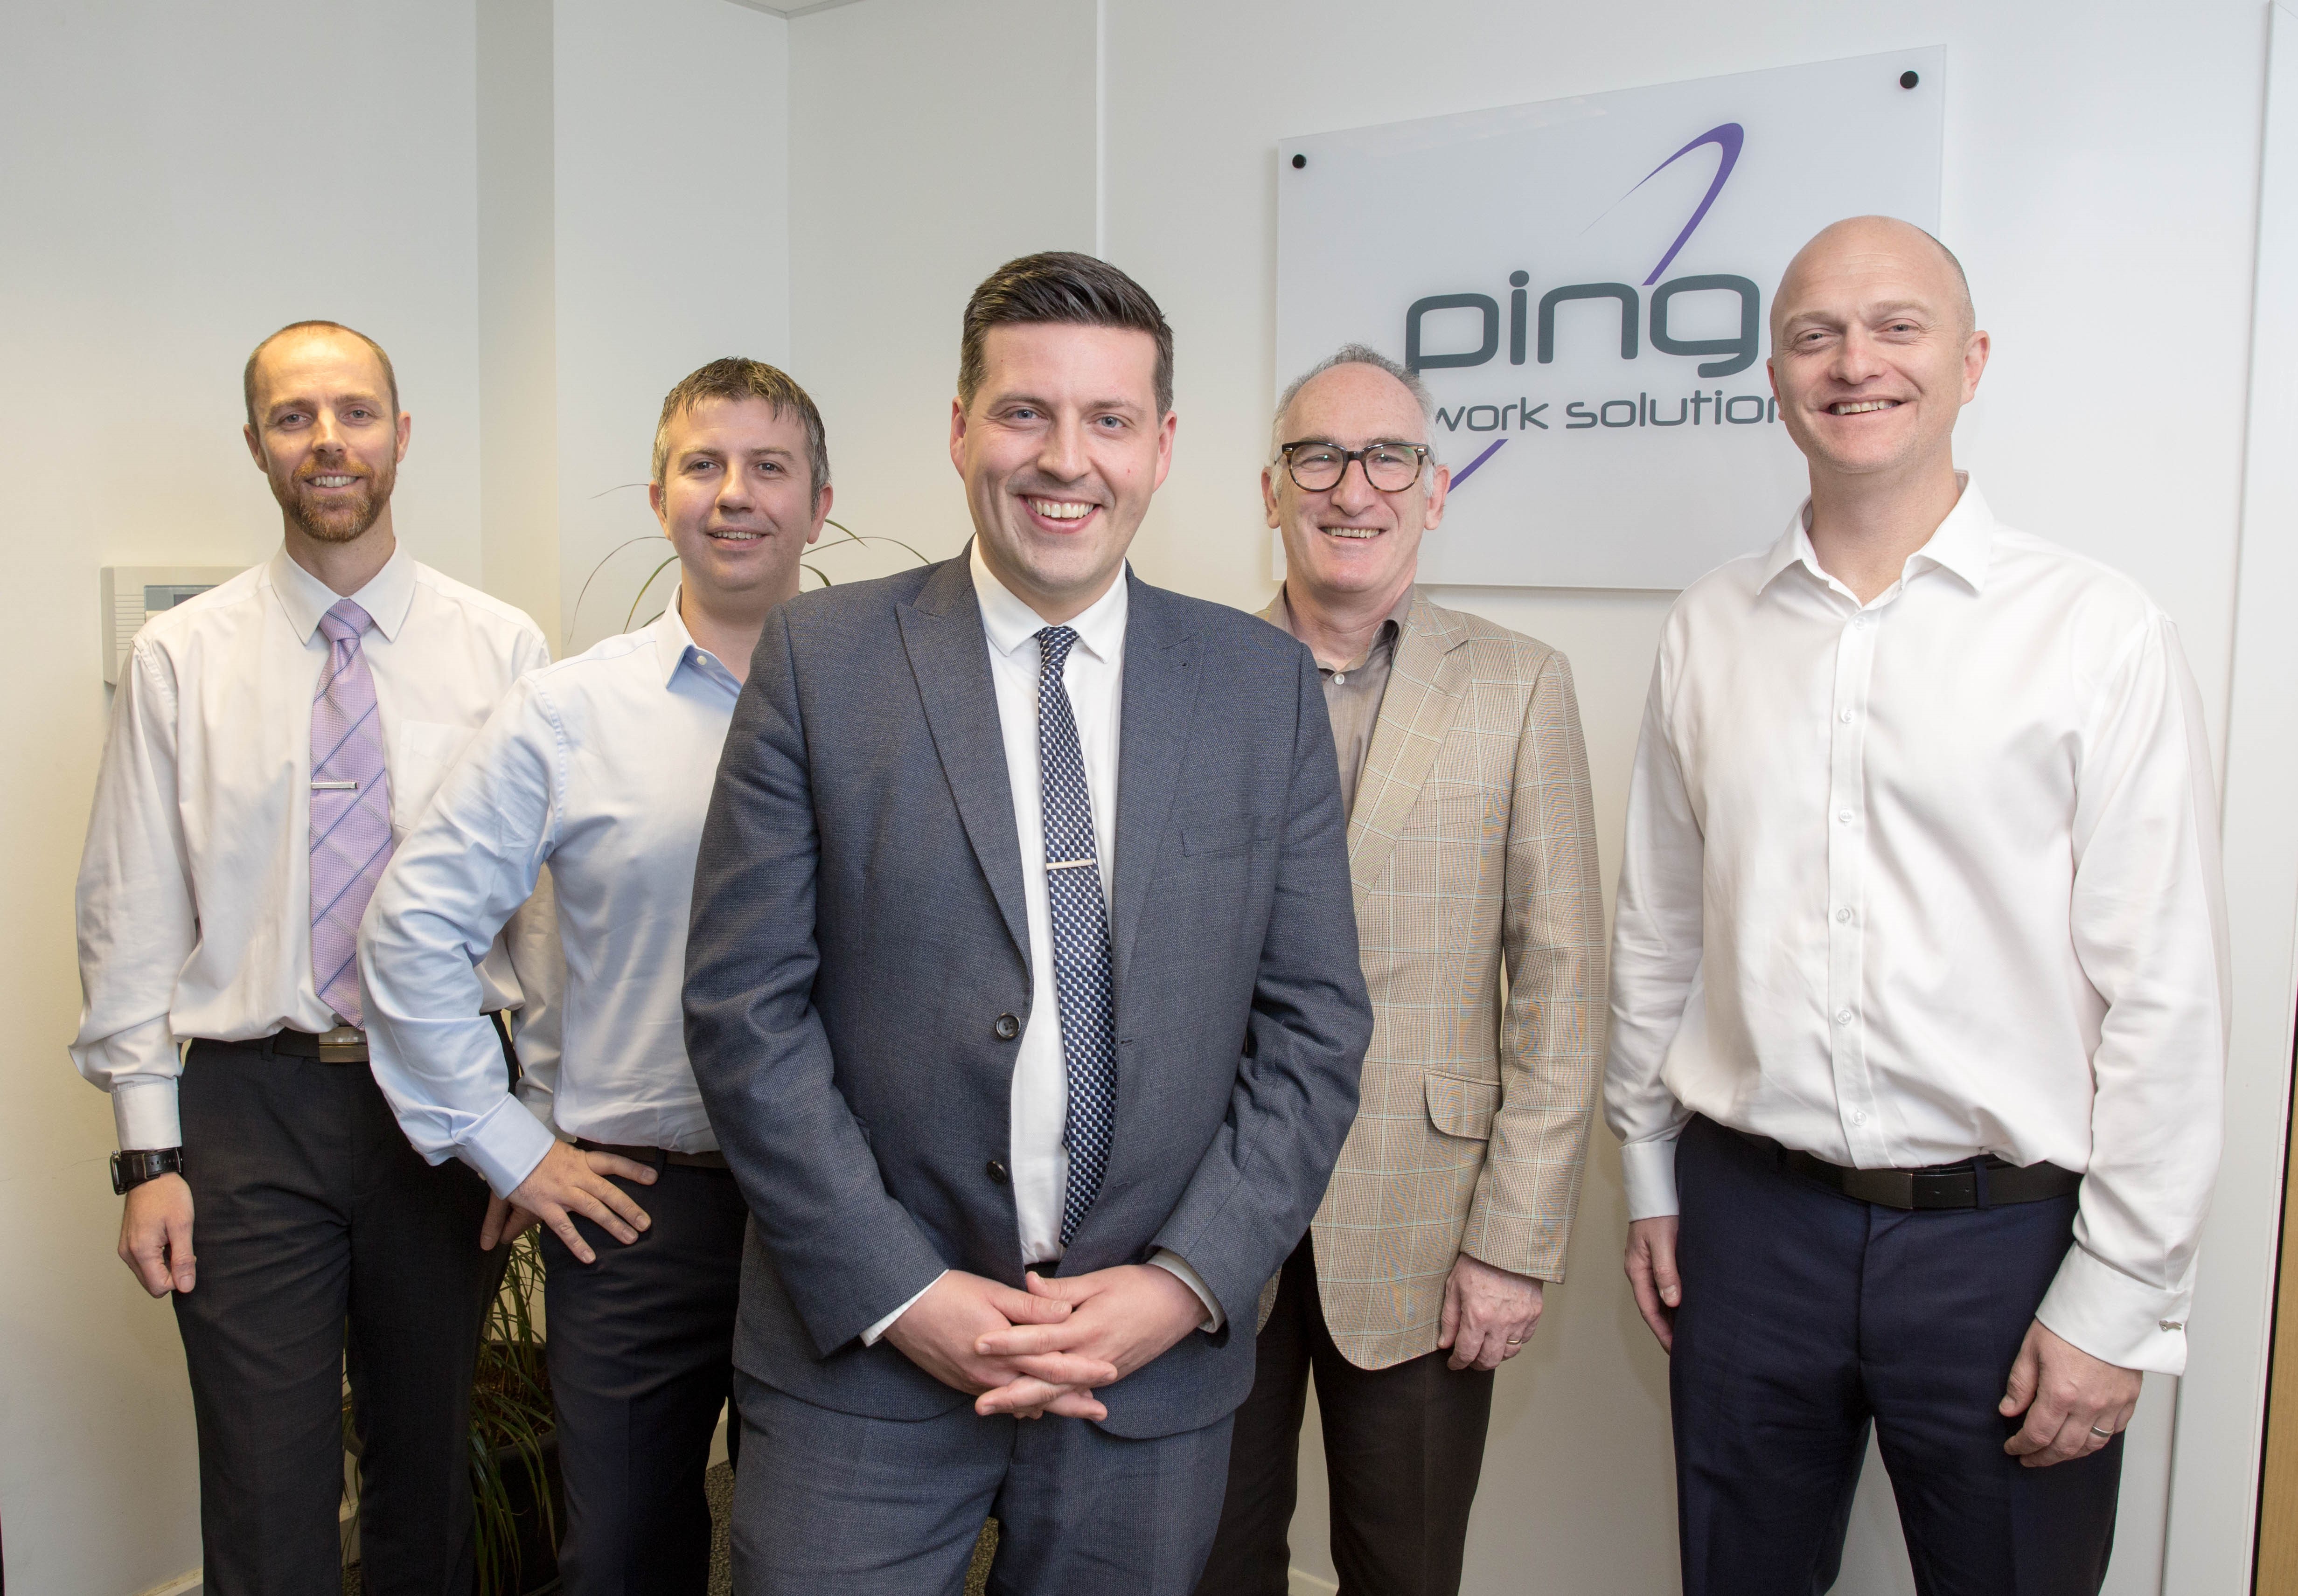 Ping Network Solutions Ltd receives £335k from Scottish Enterprise